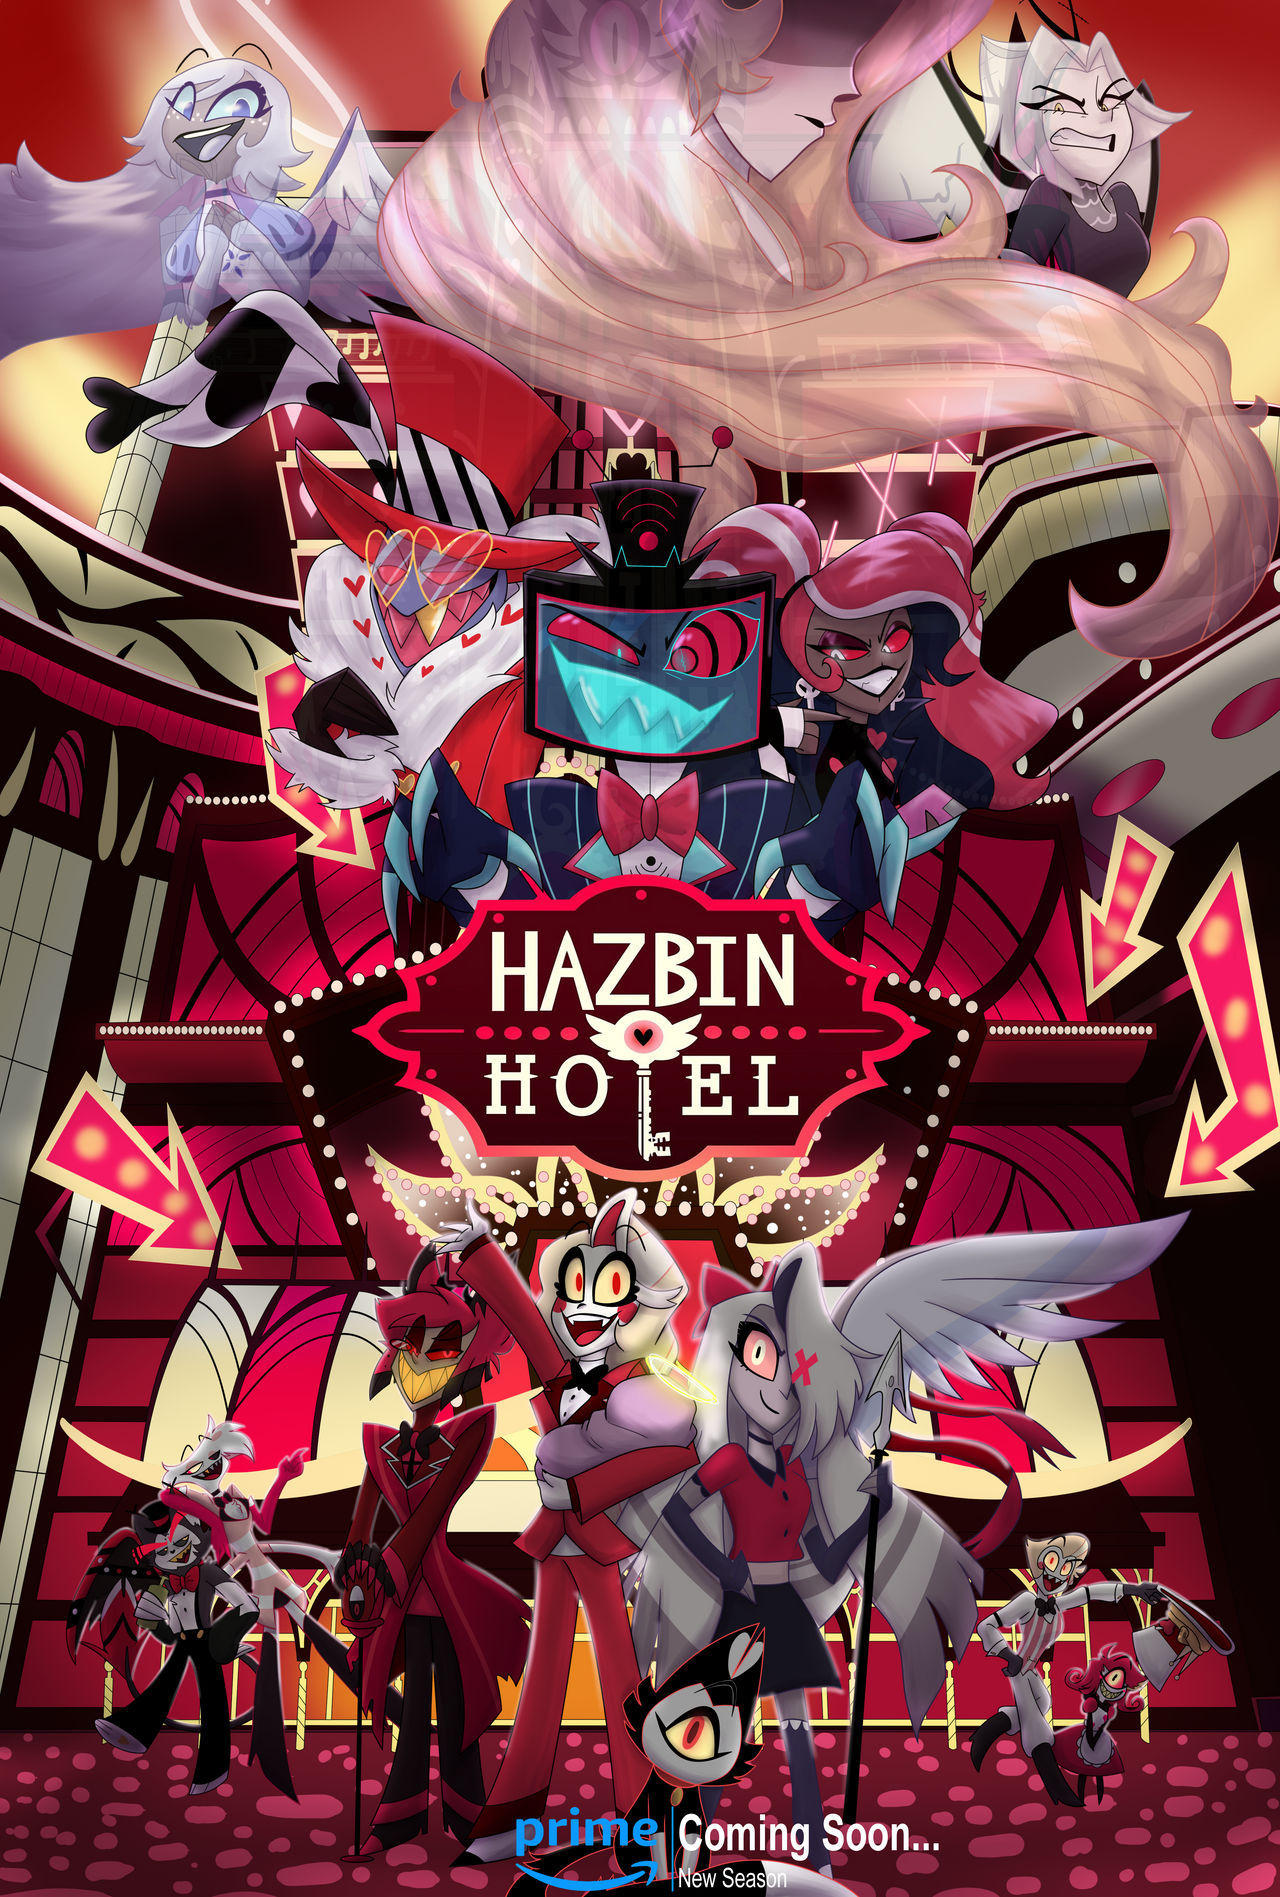 Hazbin Hotel Season 2 Cover art by IzzyoftheStars on DeviantArt